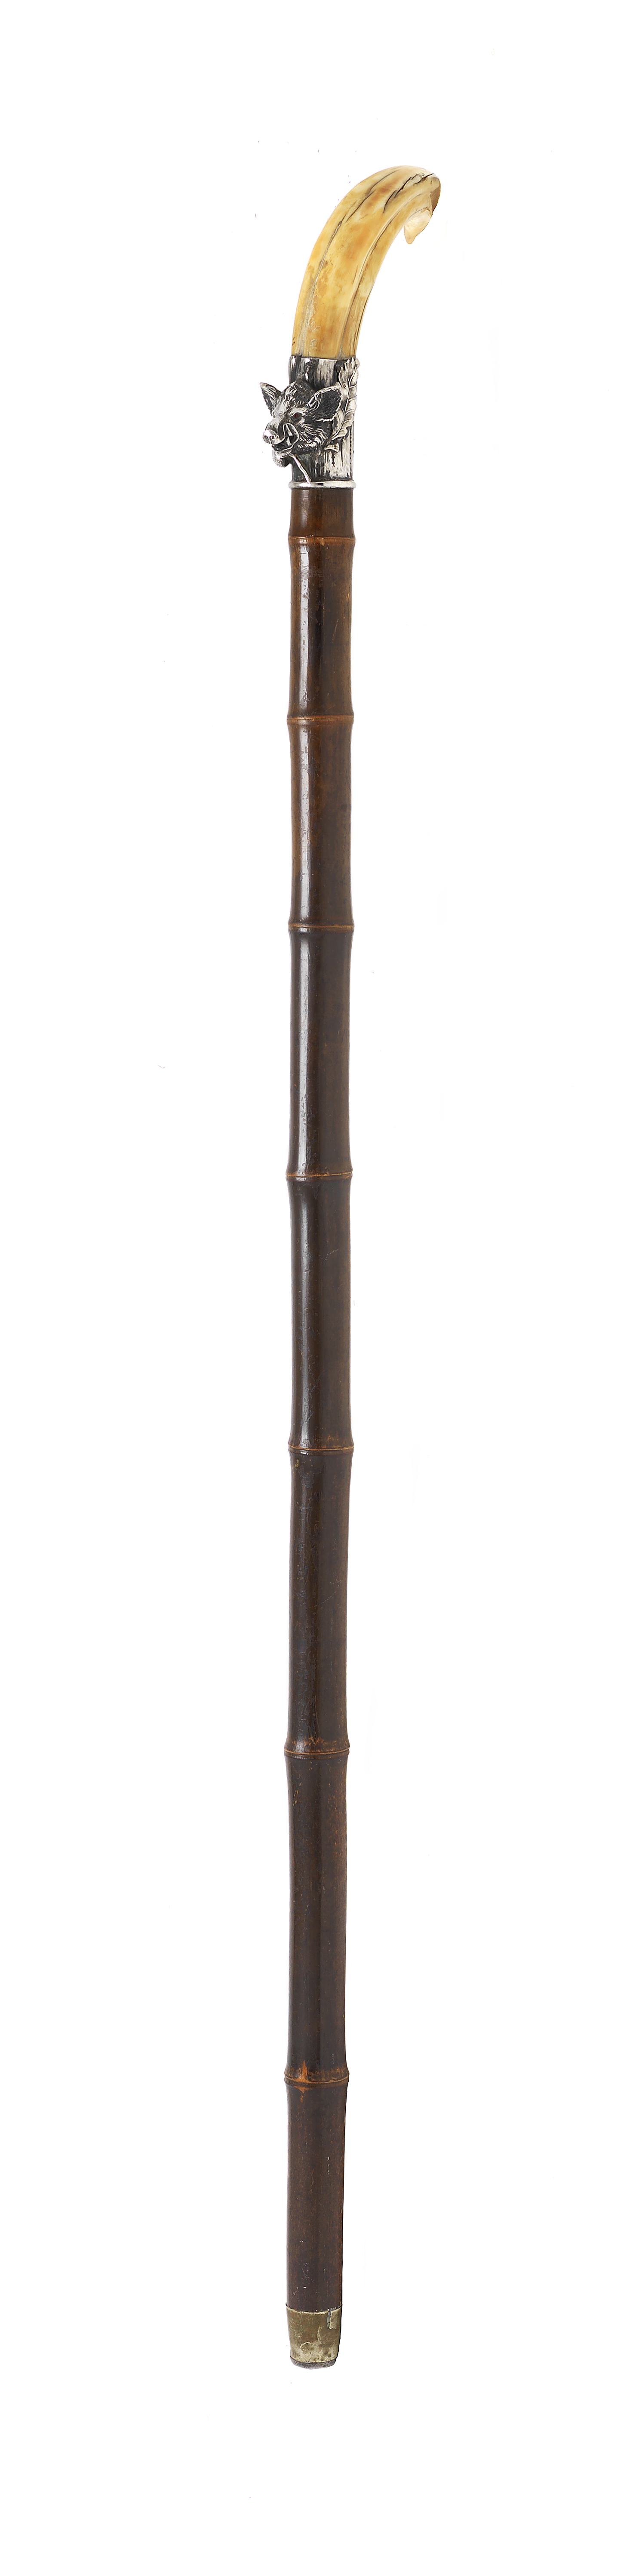 An Austrian silver-mounted boar's tusk walking cane 1872 - 1922 Vienna mark